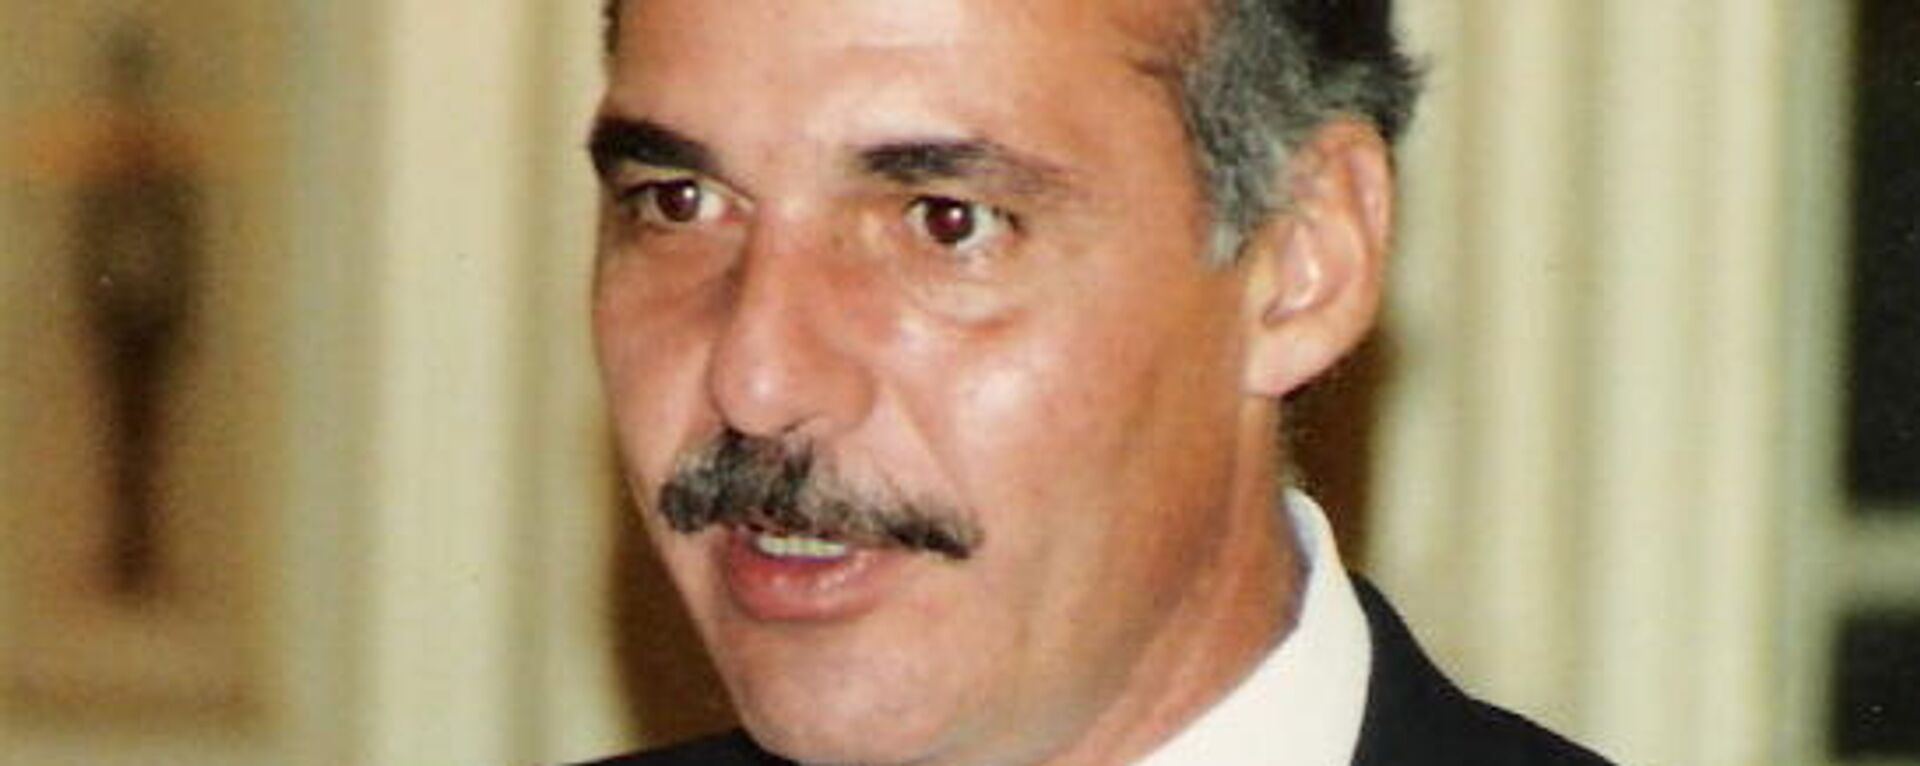 El expresidente salvadoreño Alfredo Cristiani (1989-1994) - Sputnik Mundo, 1920, 03.10.2021